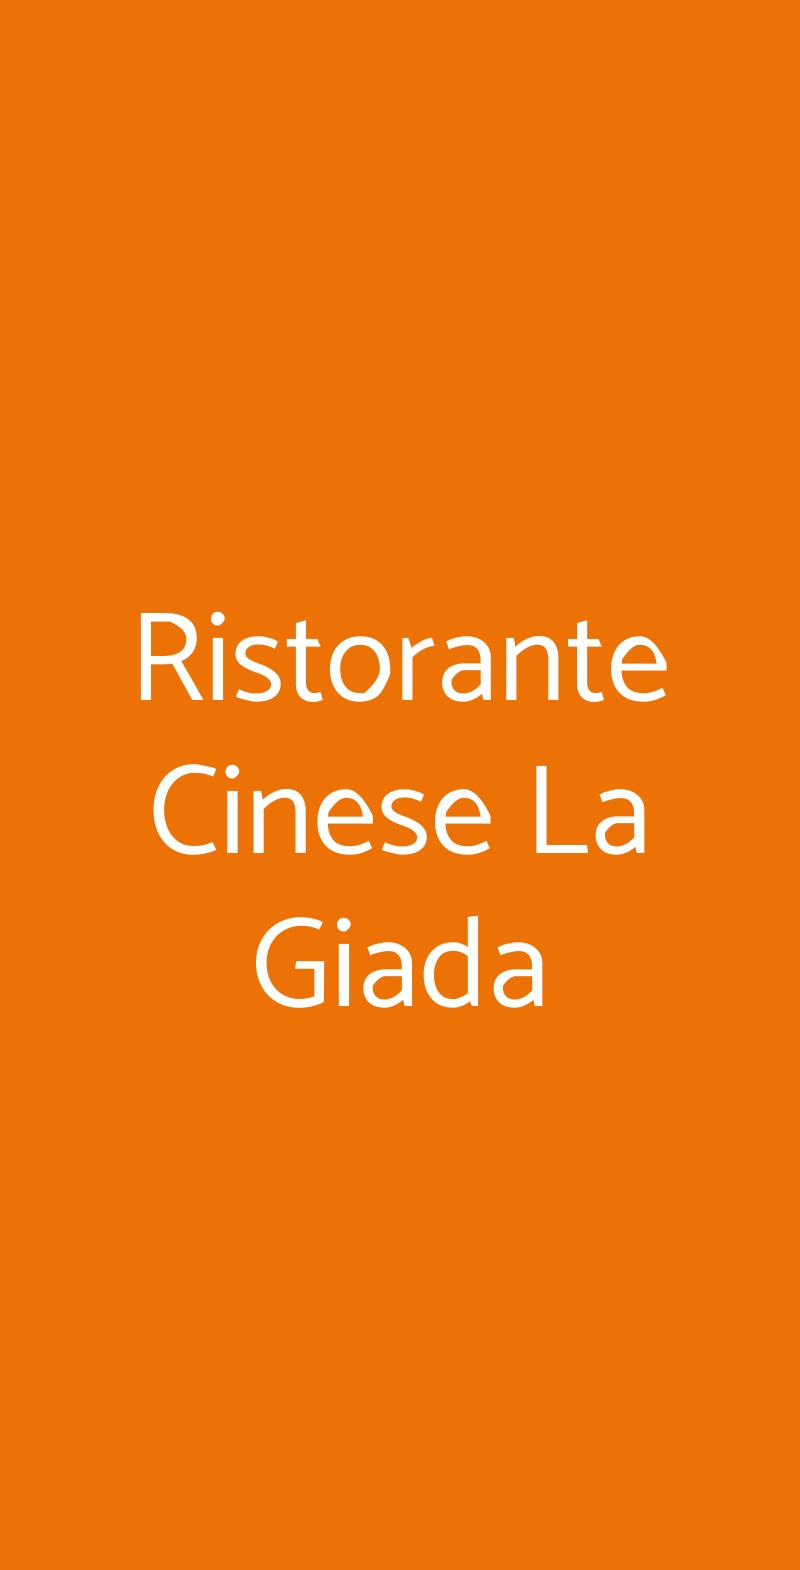 Ristorante Cinese La Giada Trieste menù 1 pagina